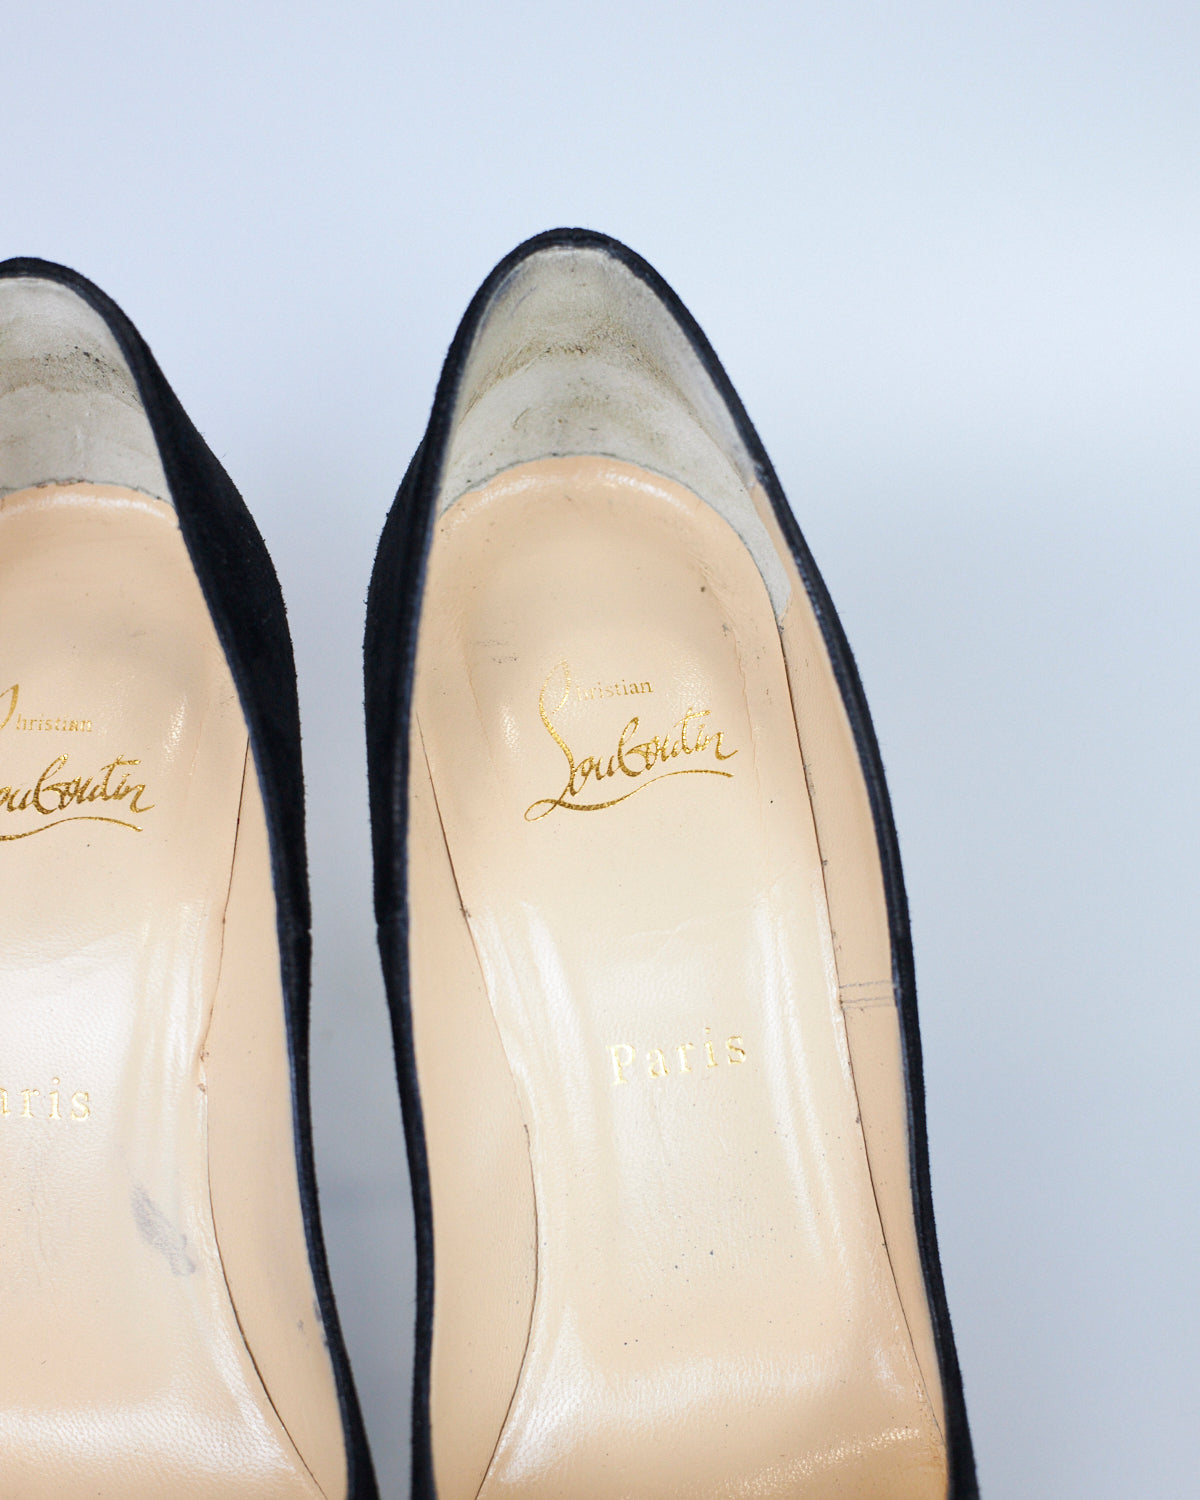 Sapatos de camurça CHRISTIAN LOUBOUTIN Kate 100 - tamanho 39 